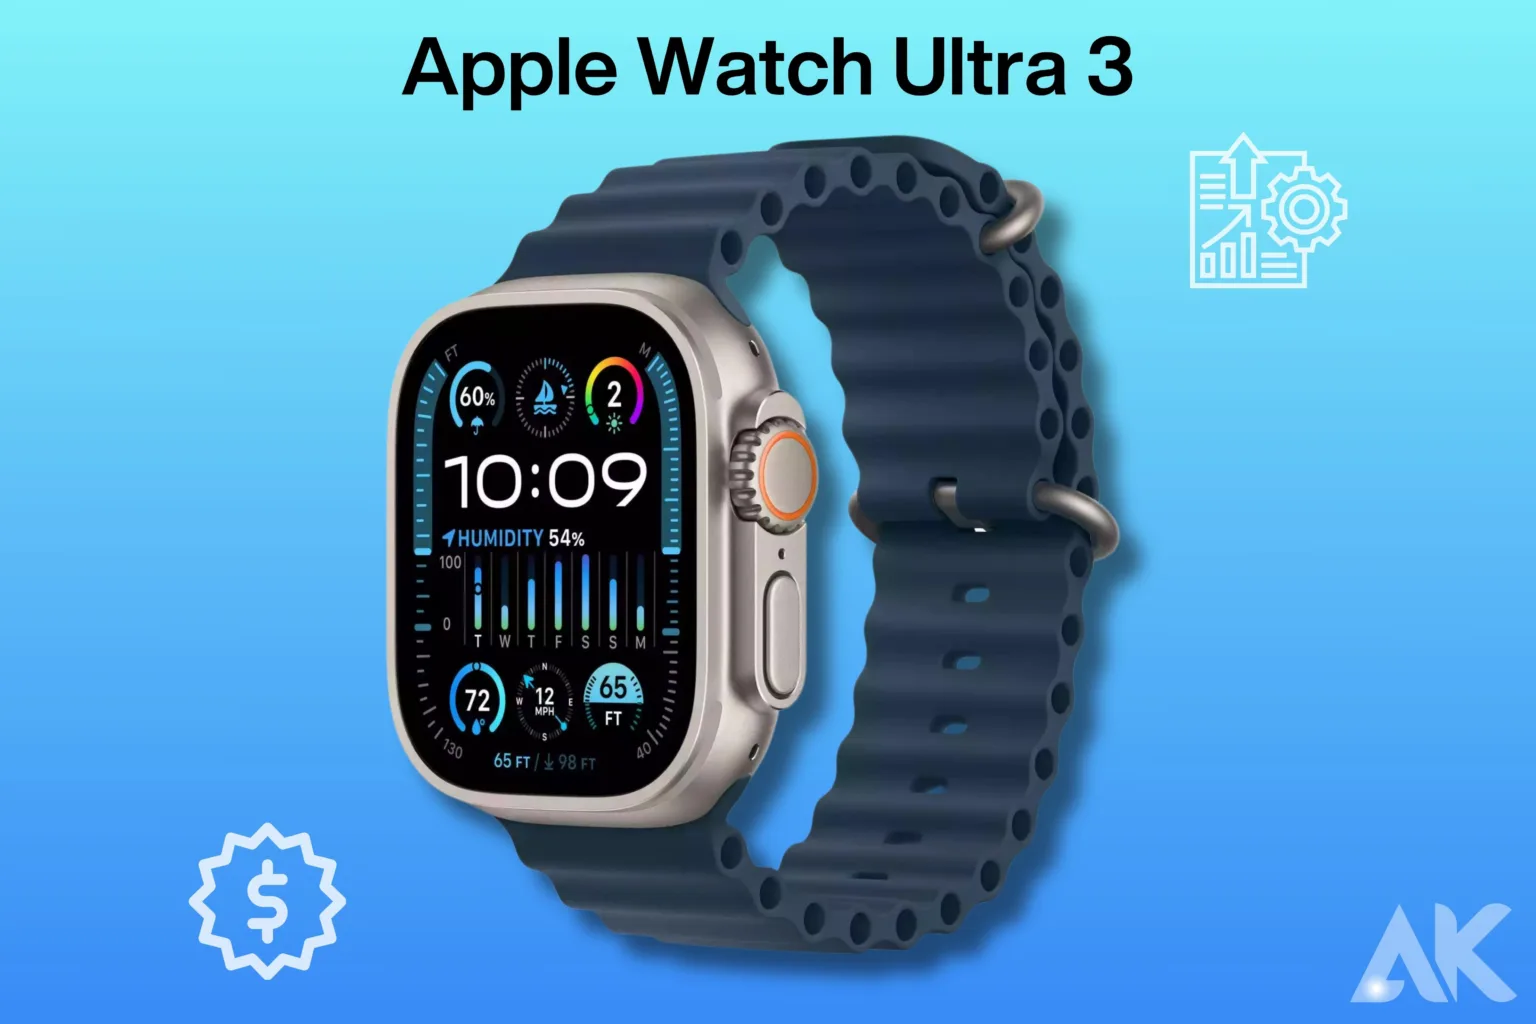 Apple Watch Ultra 3 price